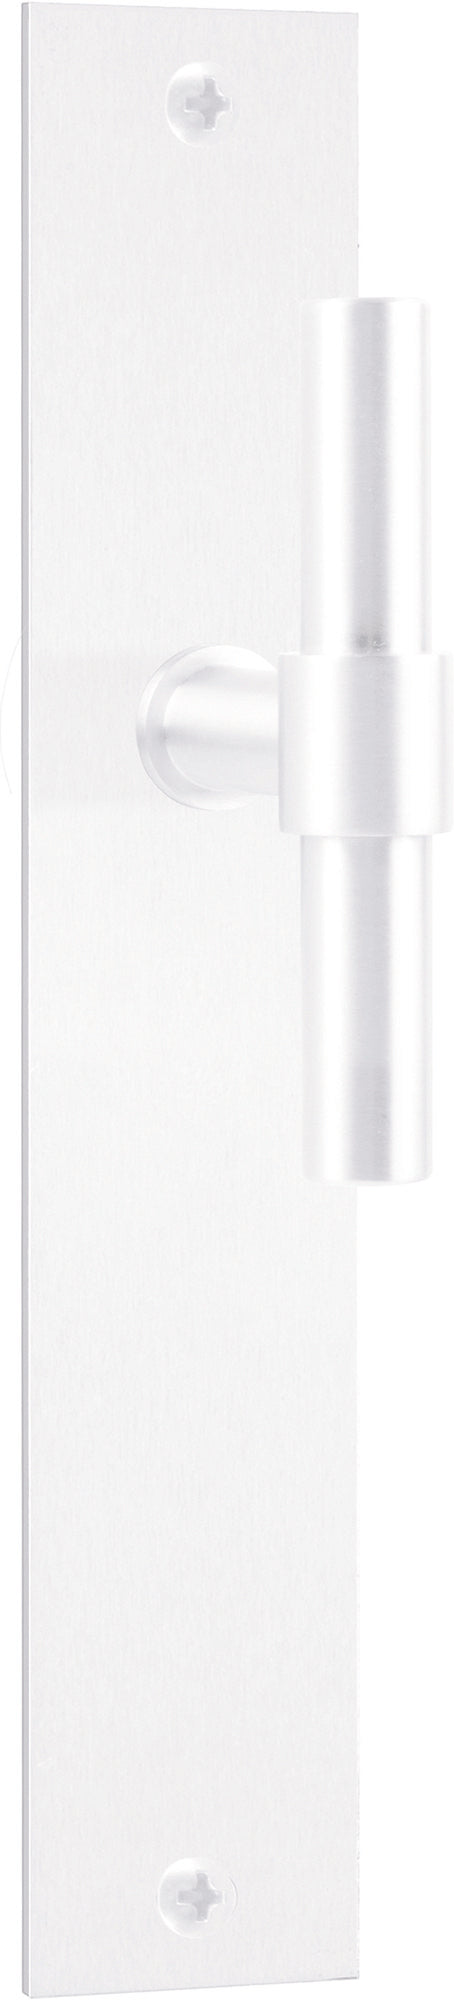 PBT15P236 deurkrukken ongev.op br. langsch. sl.56mm, mat wit